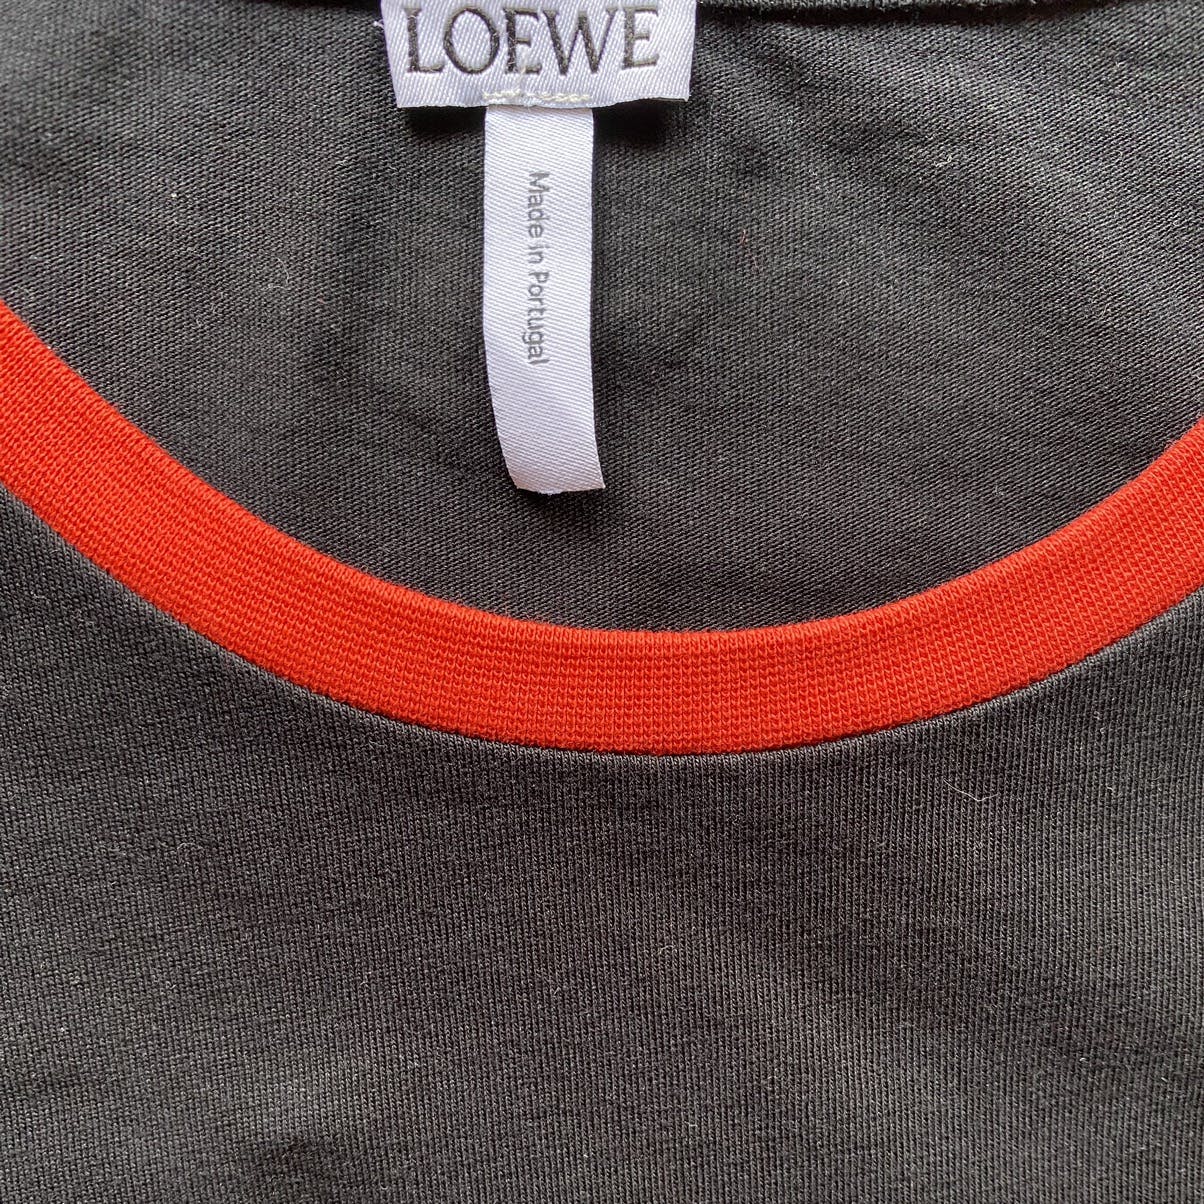 Loewe Number Patchwork T Shirt - 4